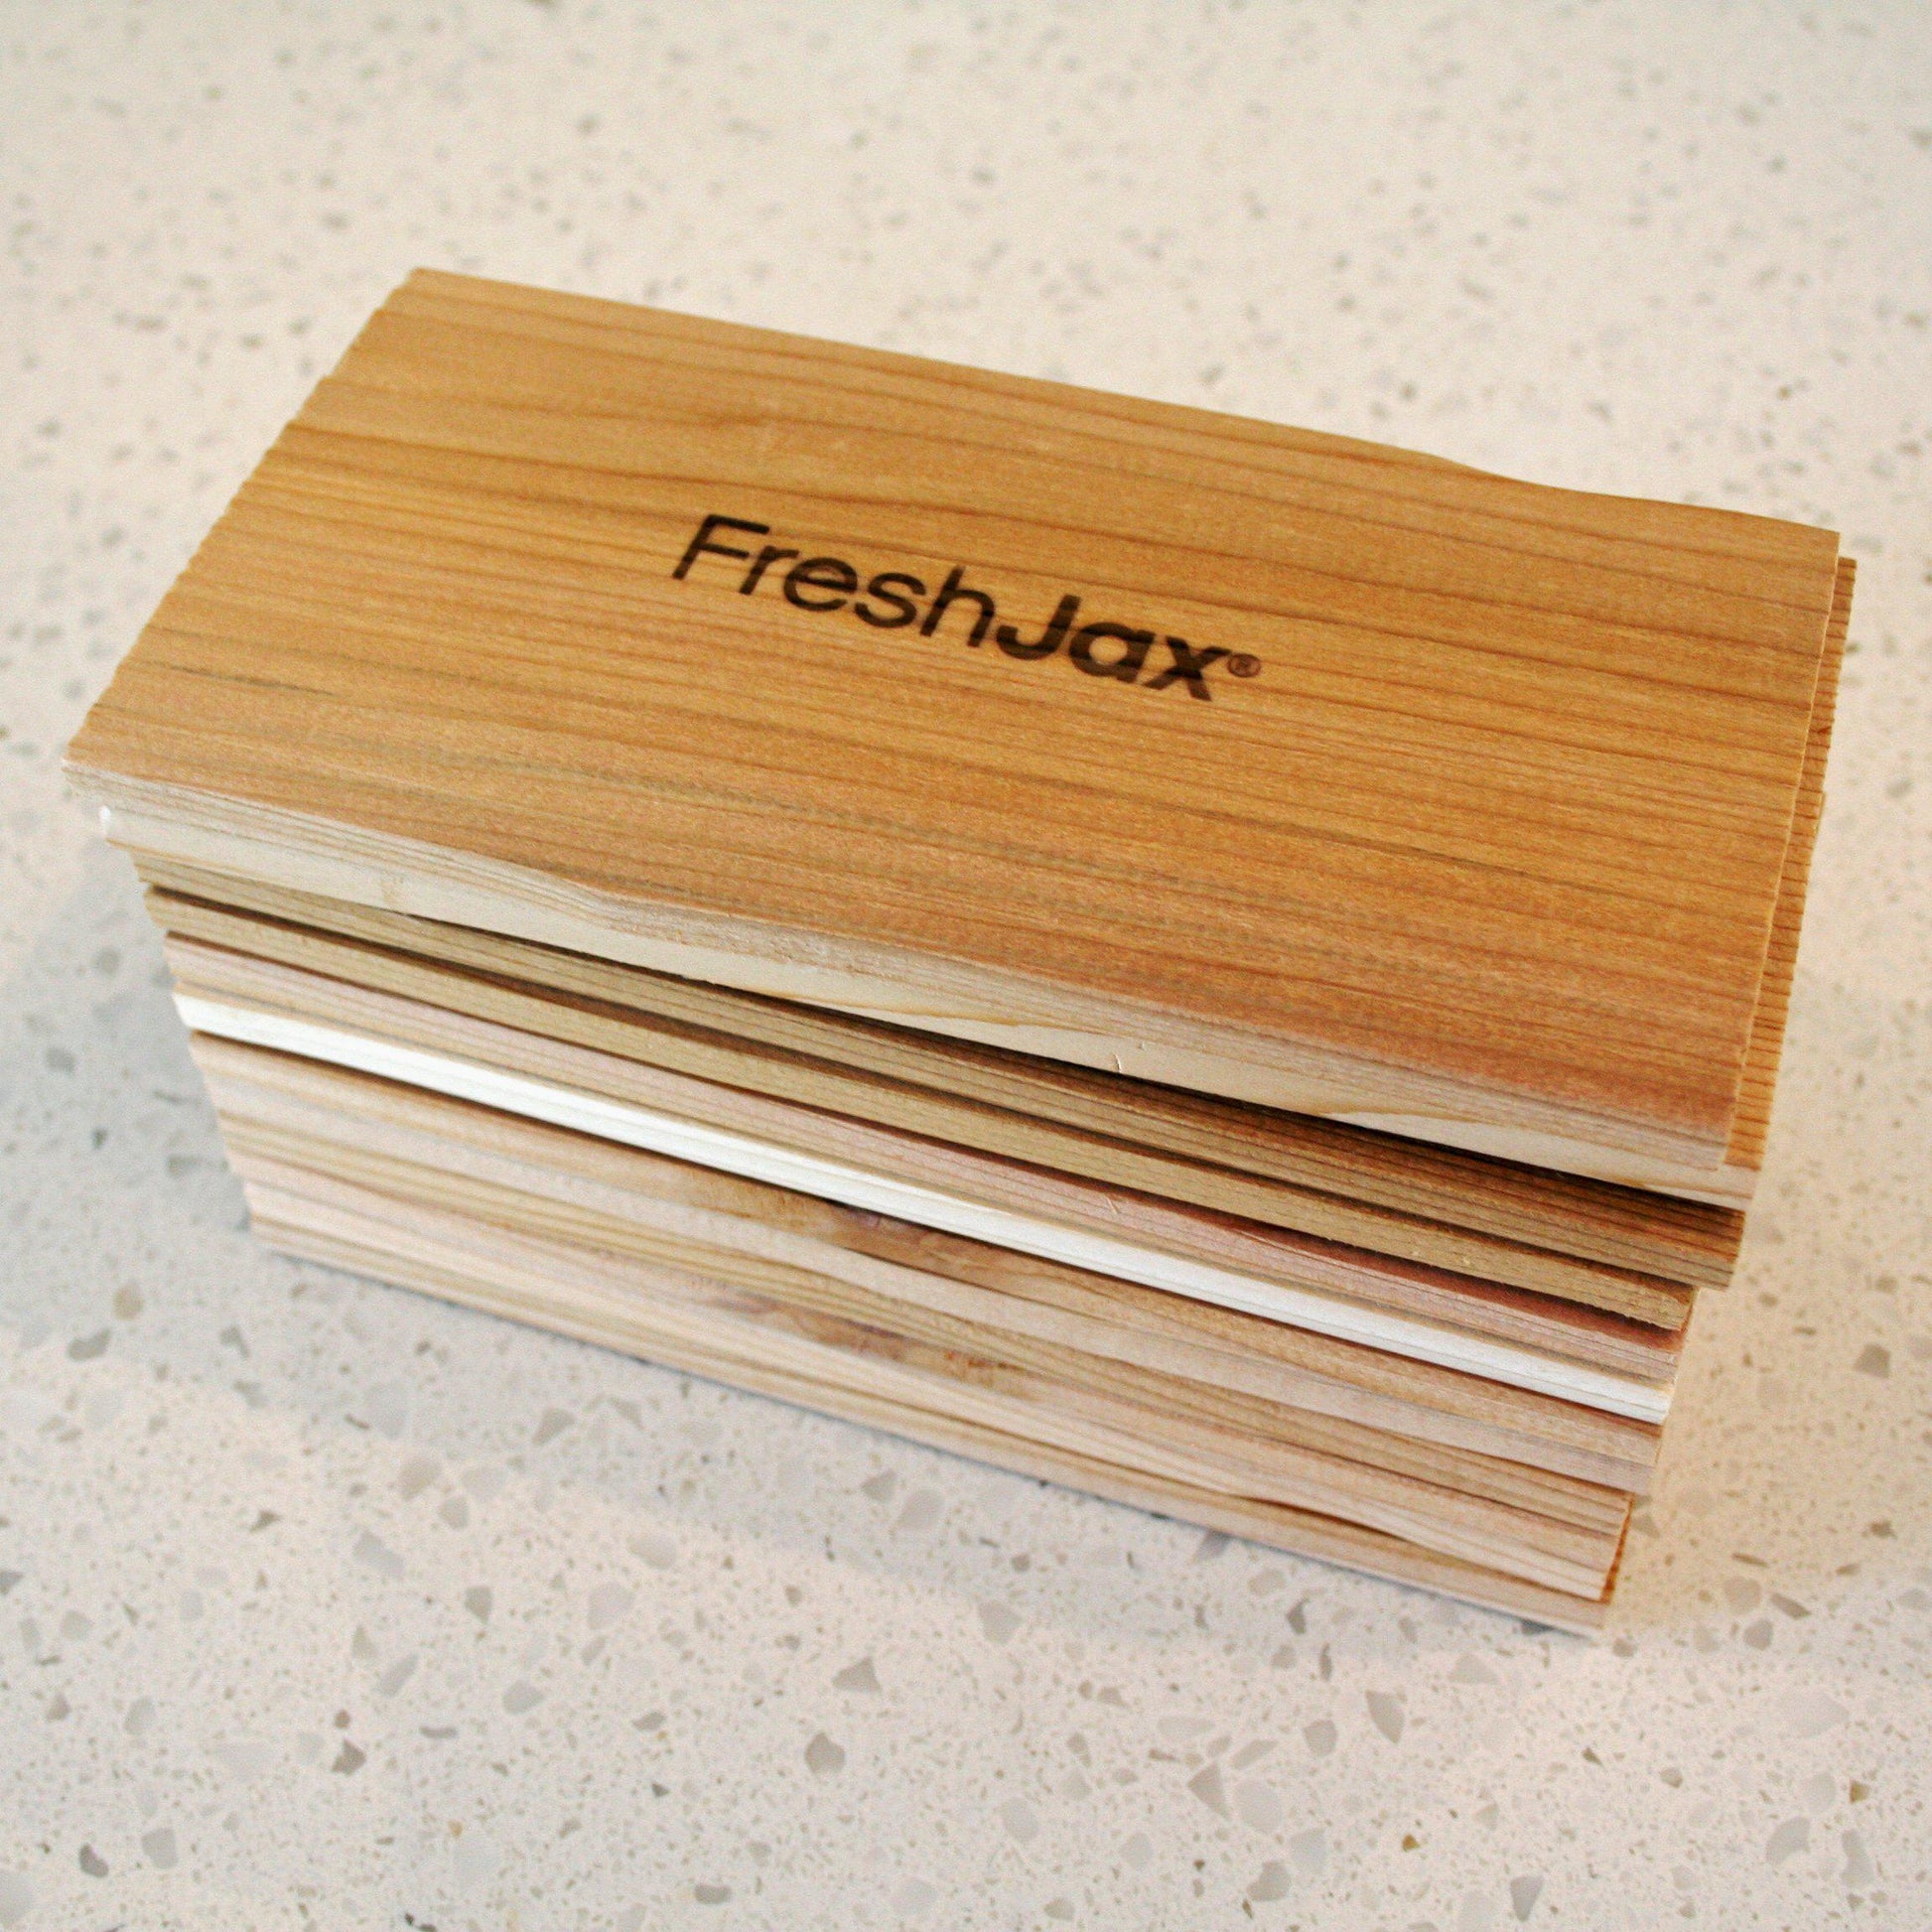 FreshJax Organic Spices Wood Grilling Planks